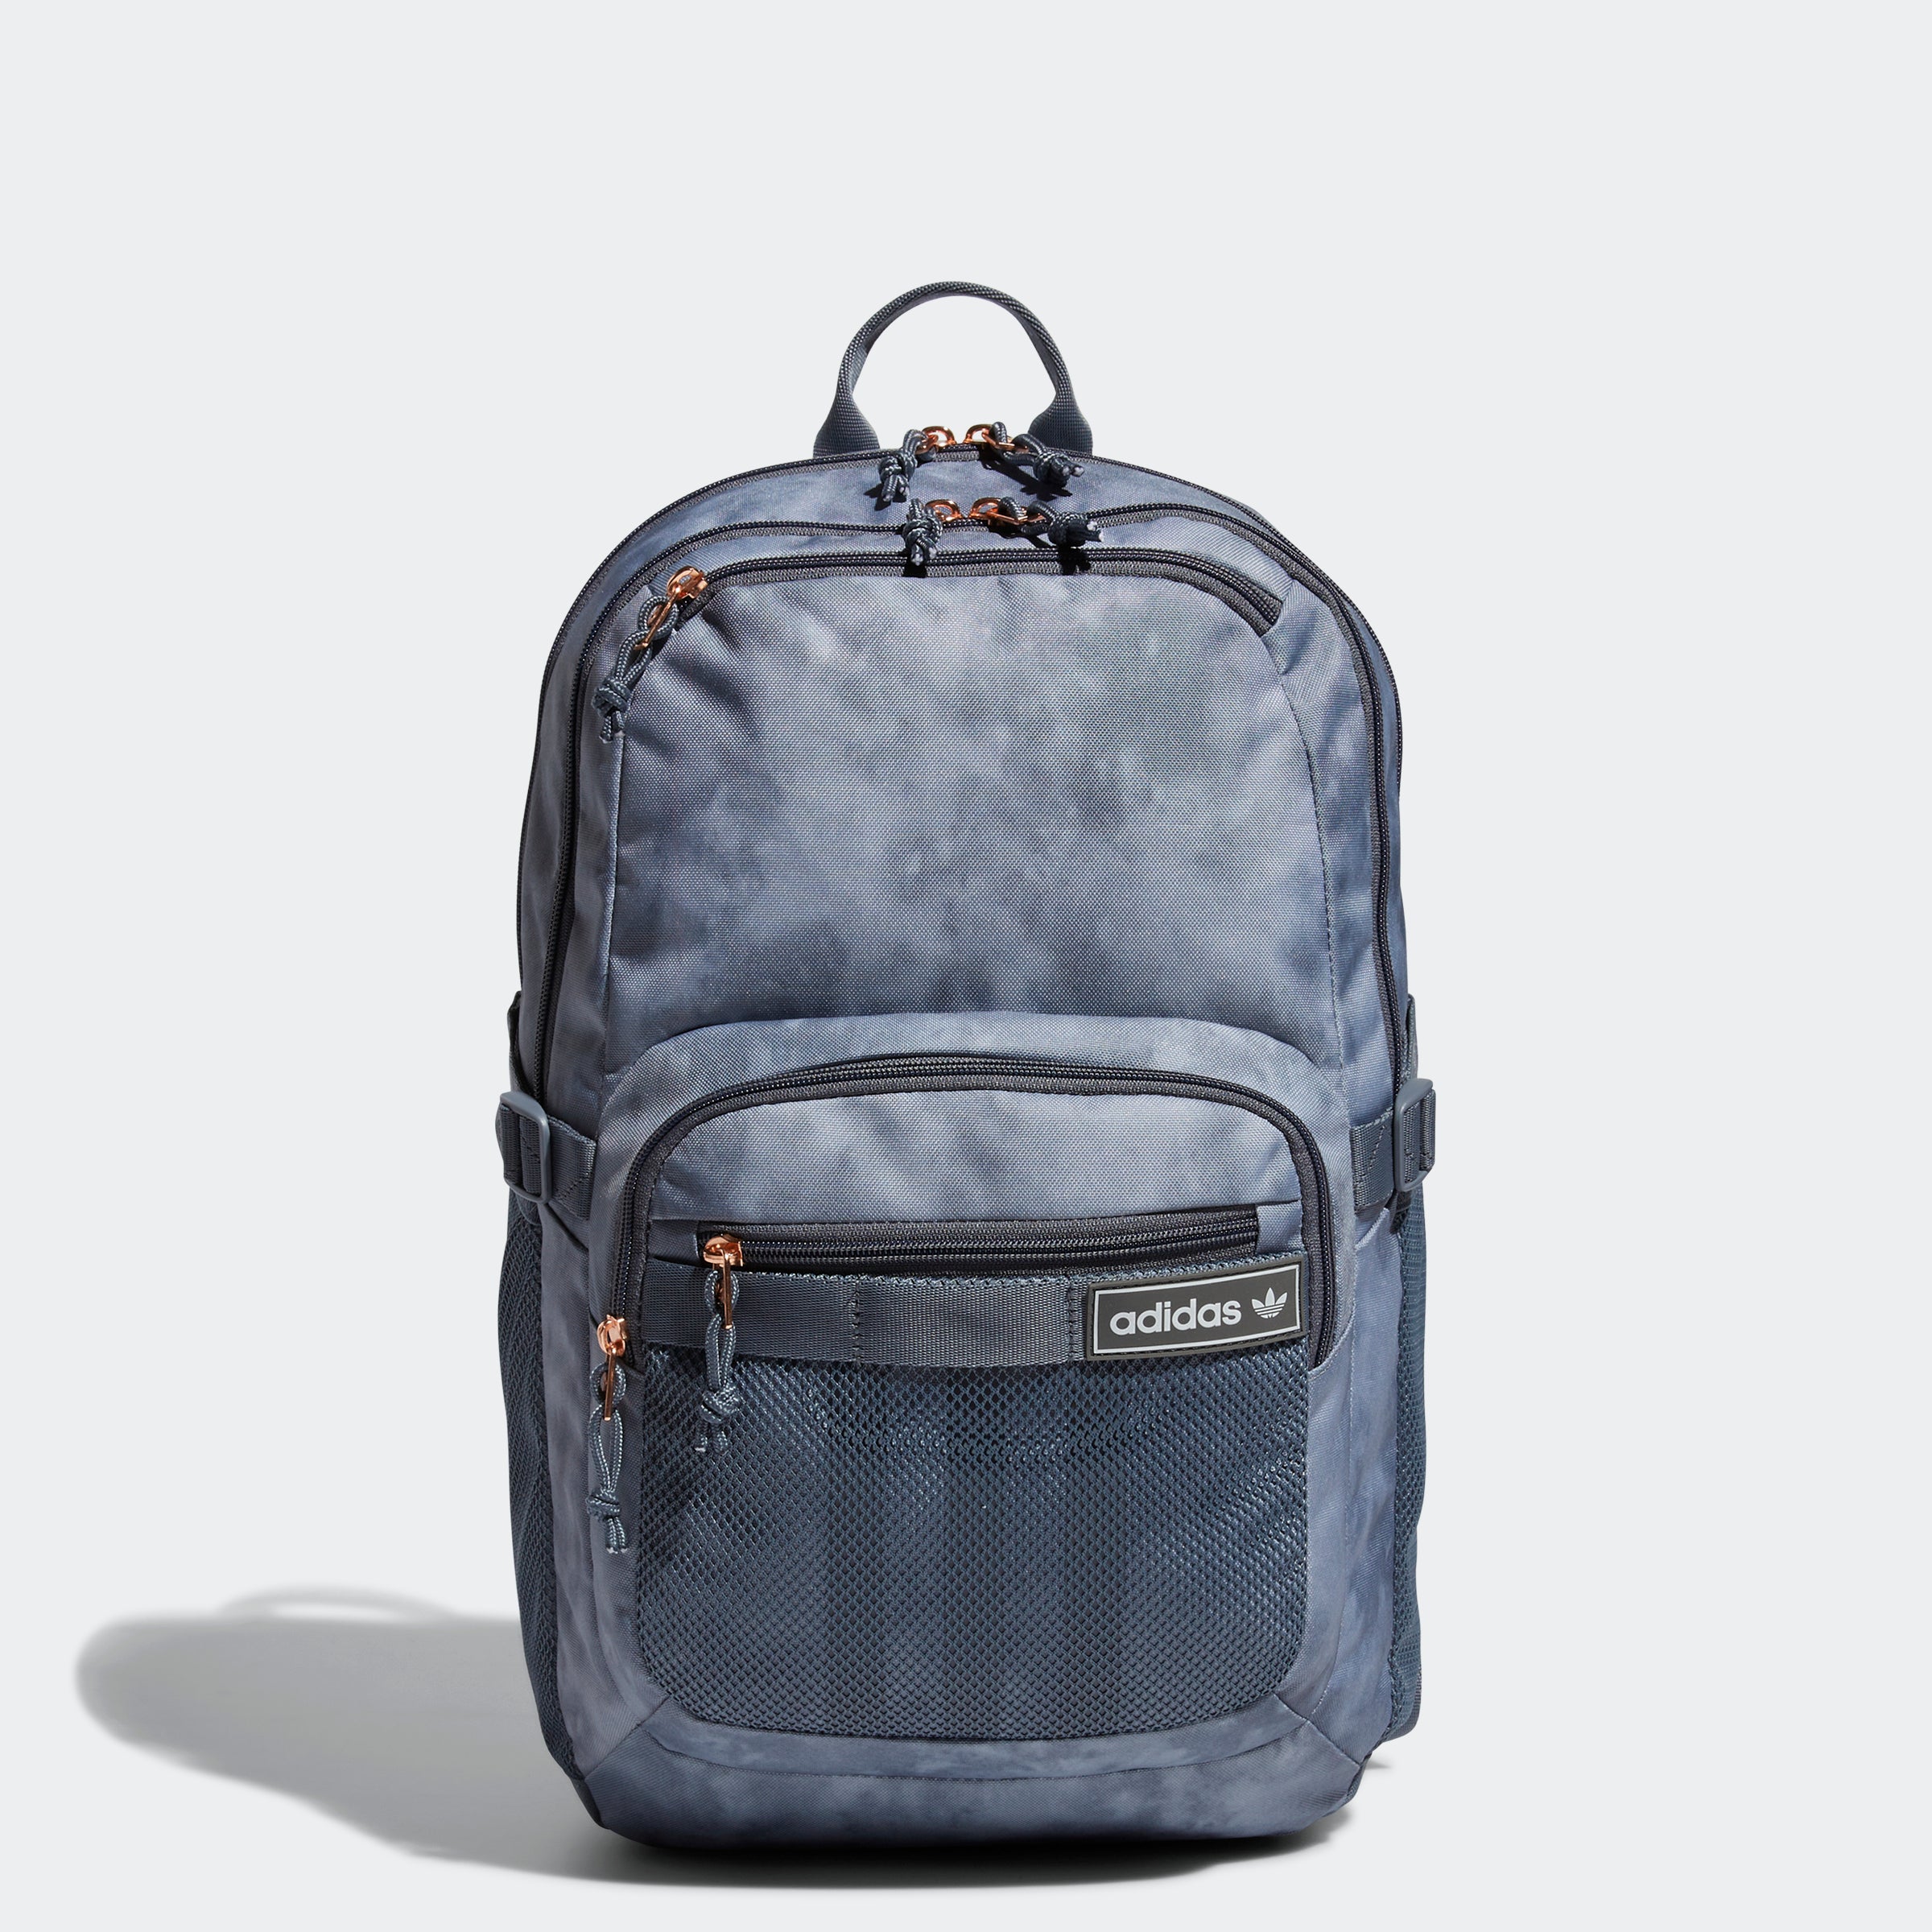 Adidas Originals Energy Backpack In Grey/grey